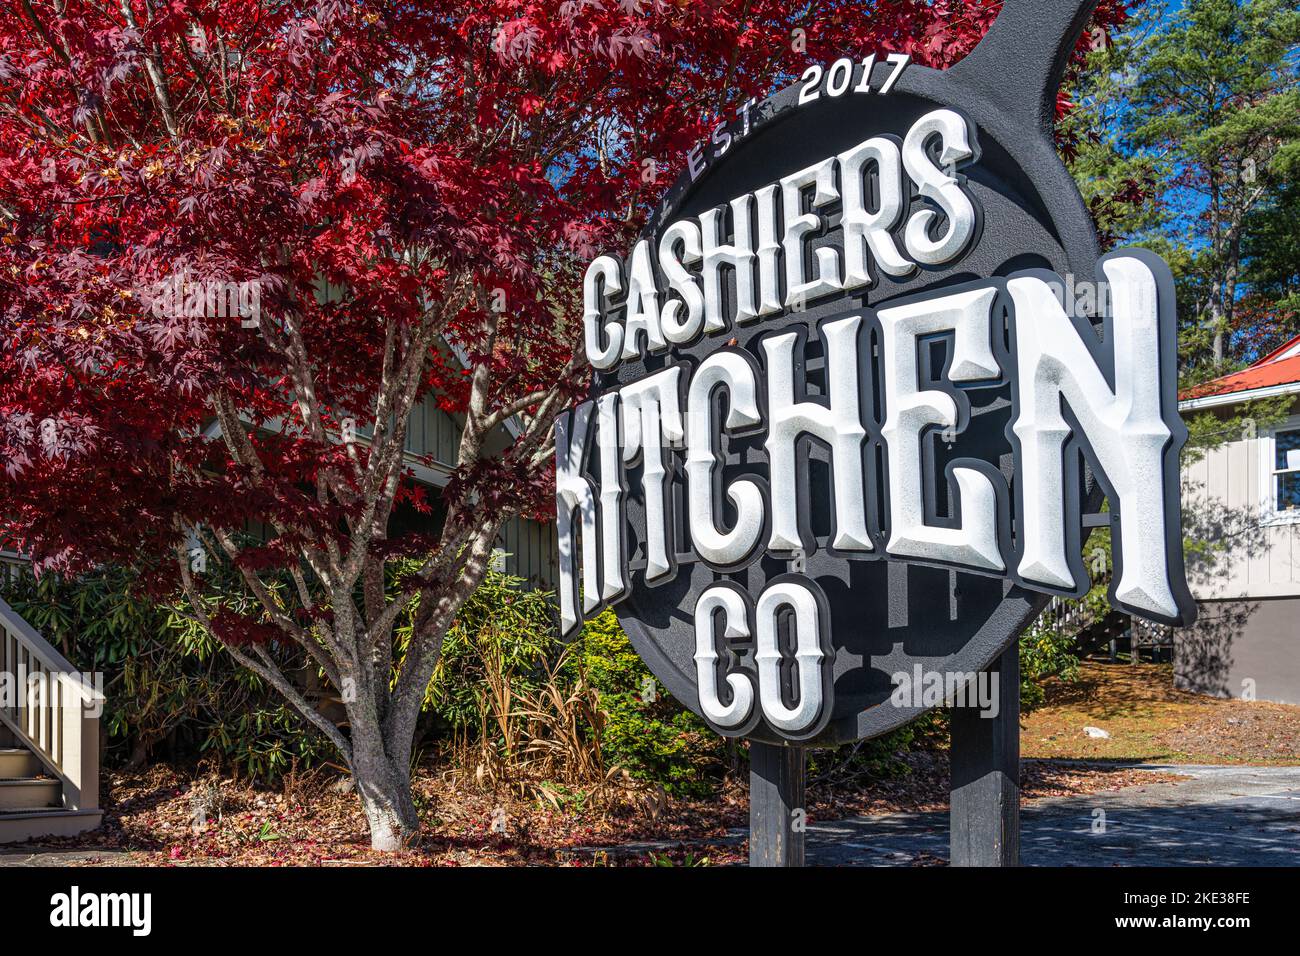 Cashiers Kitchen Company in Cashiers, North Carolina. (USA) Stock Photo